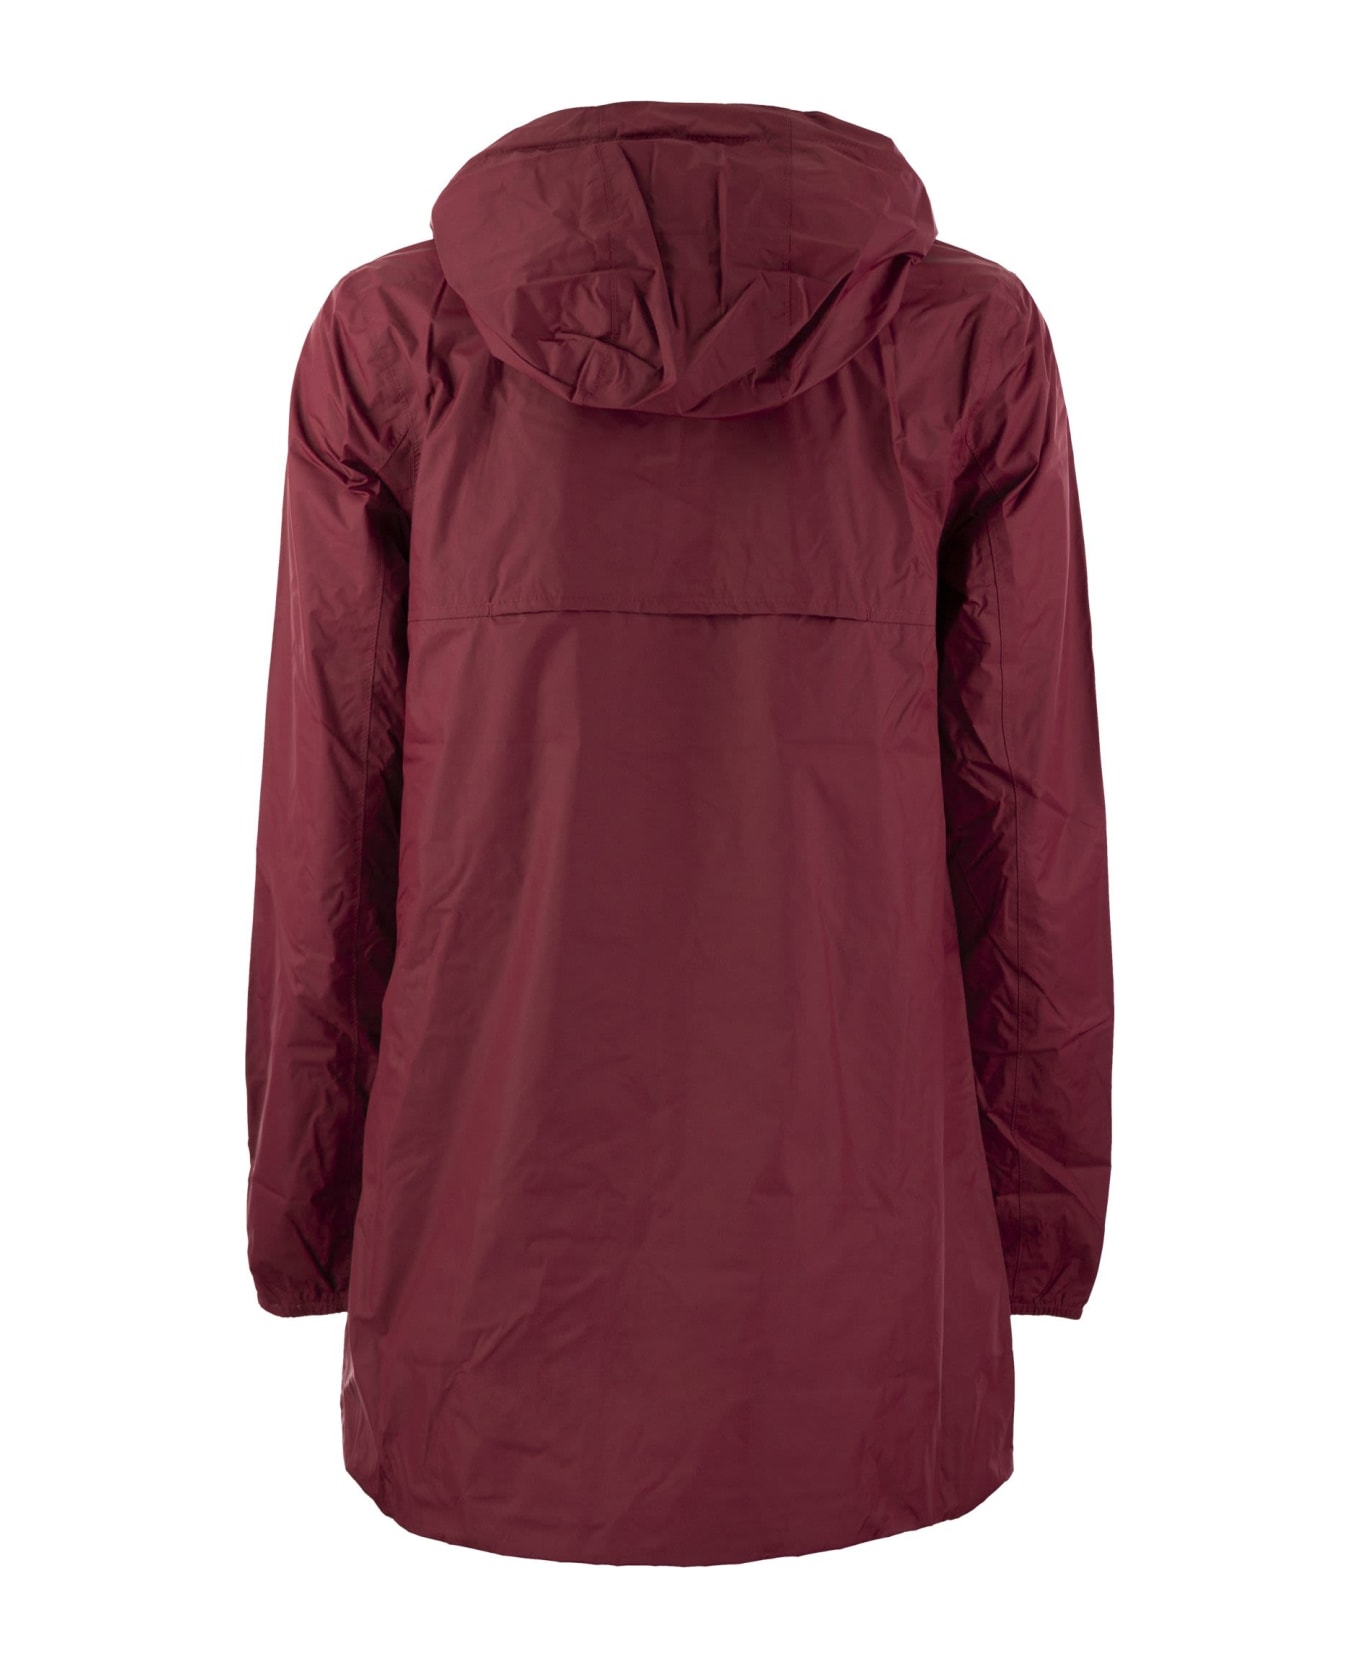 K-Way Sophie Plus - Reversible Hooded Jacket - Bordeaux/ice レインコート